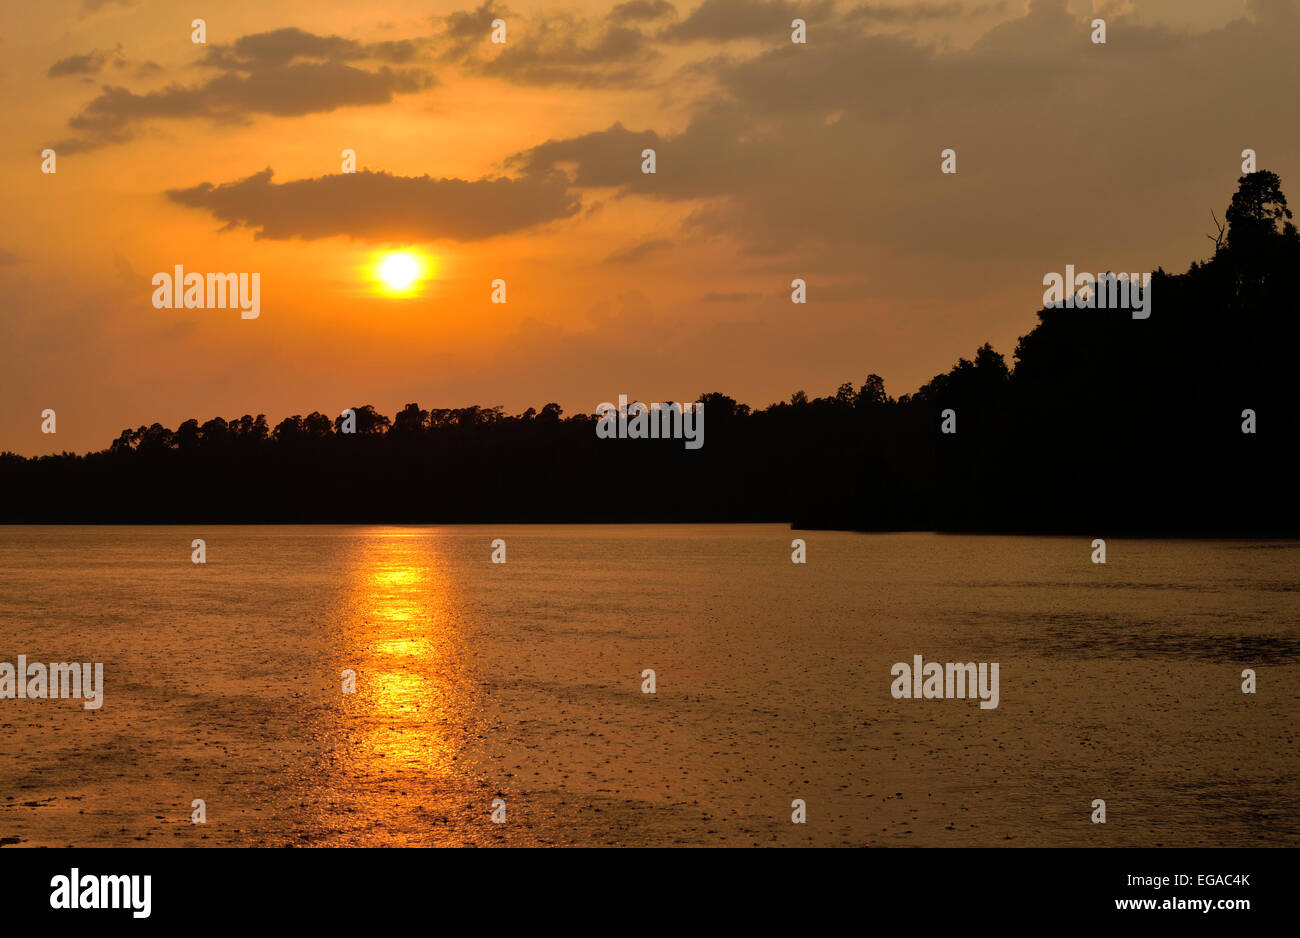 Siczki reservoir at sunset, Mazovia Region, Poland Stock Photo